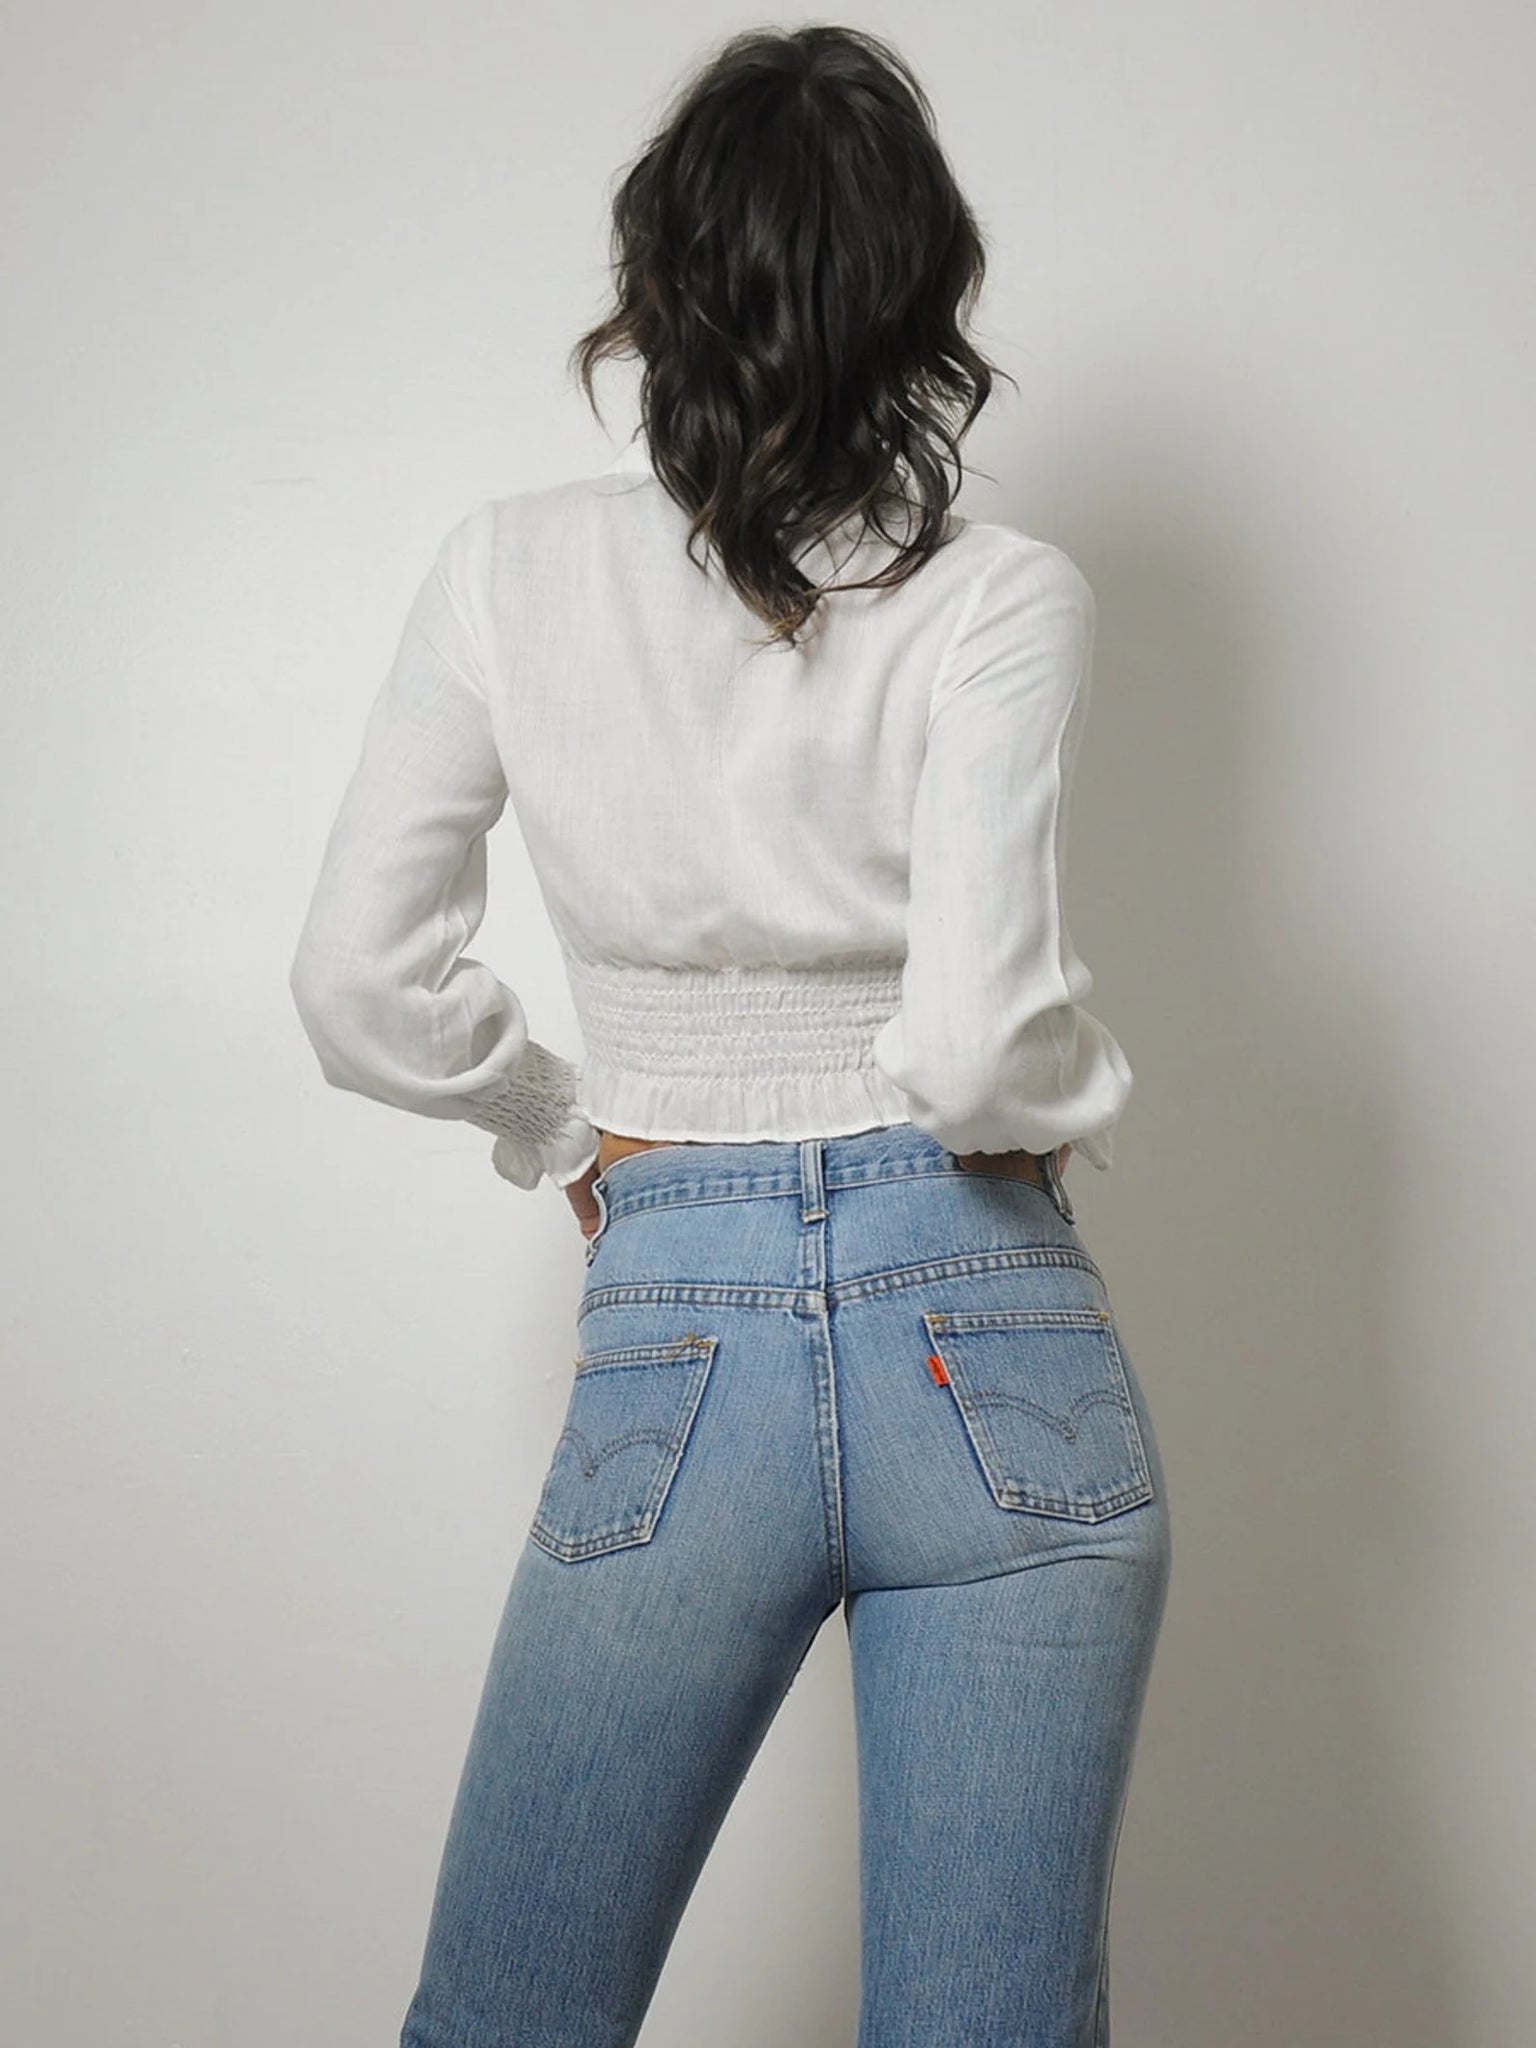 Levi's for Girls Jeans 26x30 – NOIROHIO VINTAGE